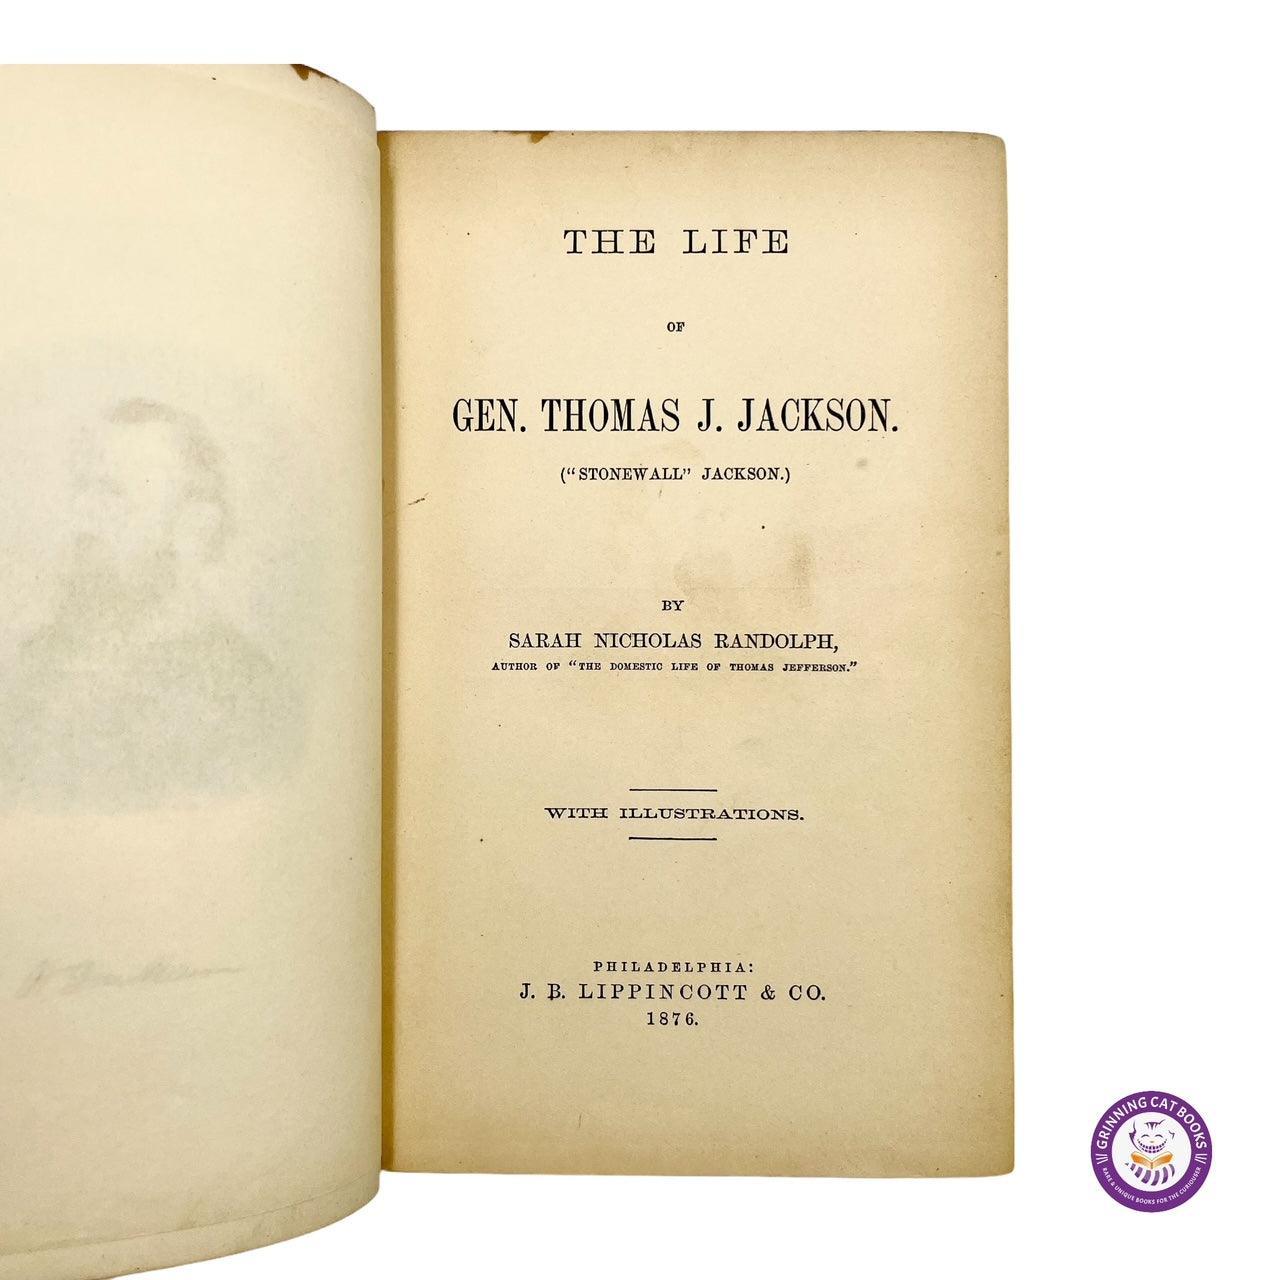 The Life of General Thomas J. '(Stonewall') Jackson - Grinning Cat Books - AMERICANA - AMERICAN HISTORY, CIVIL WAR, HISTORY